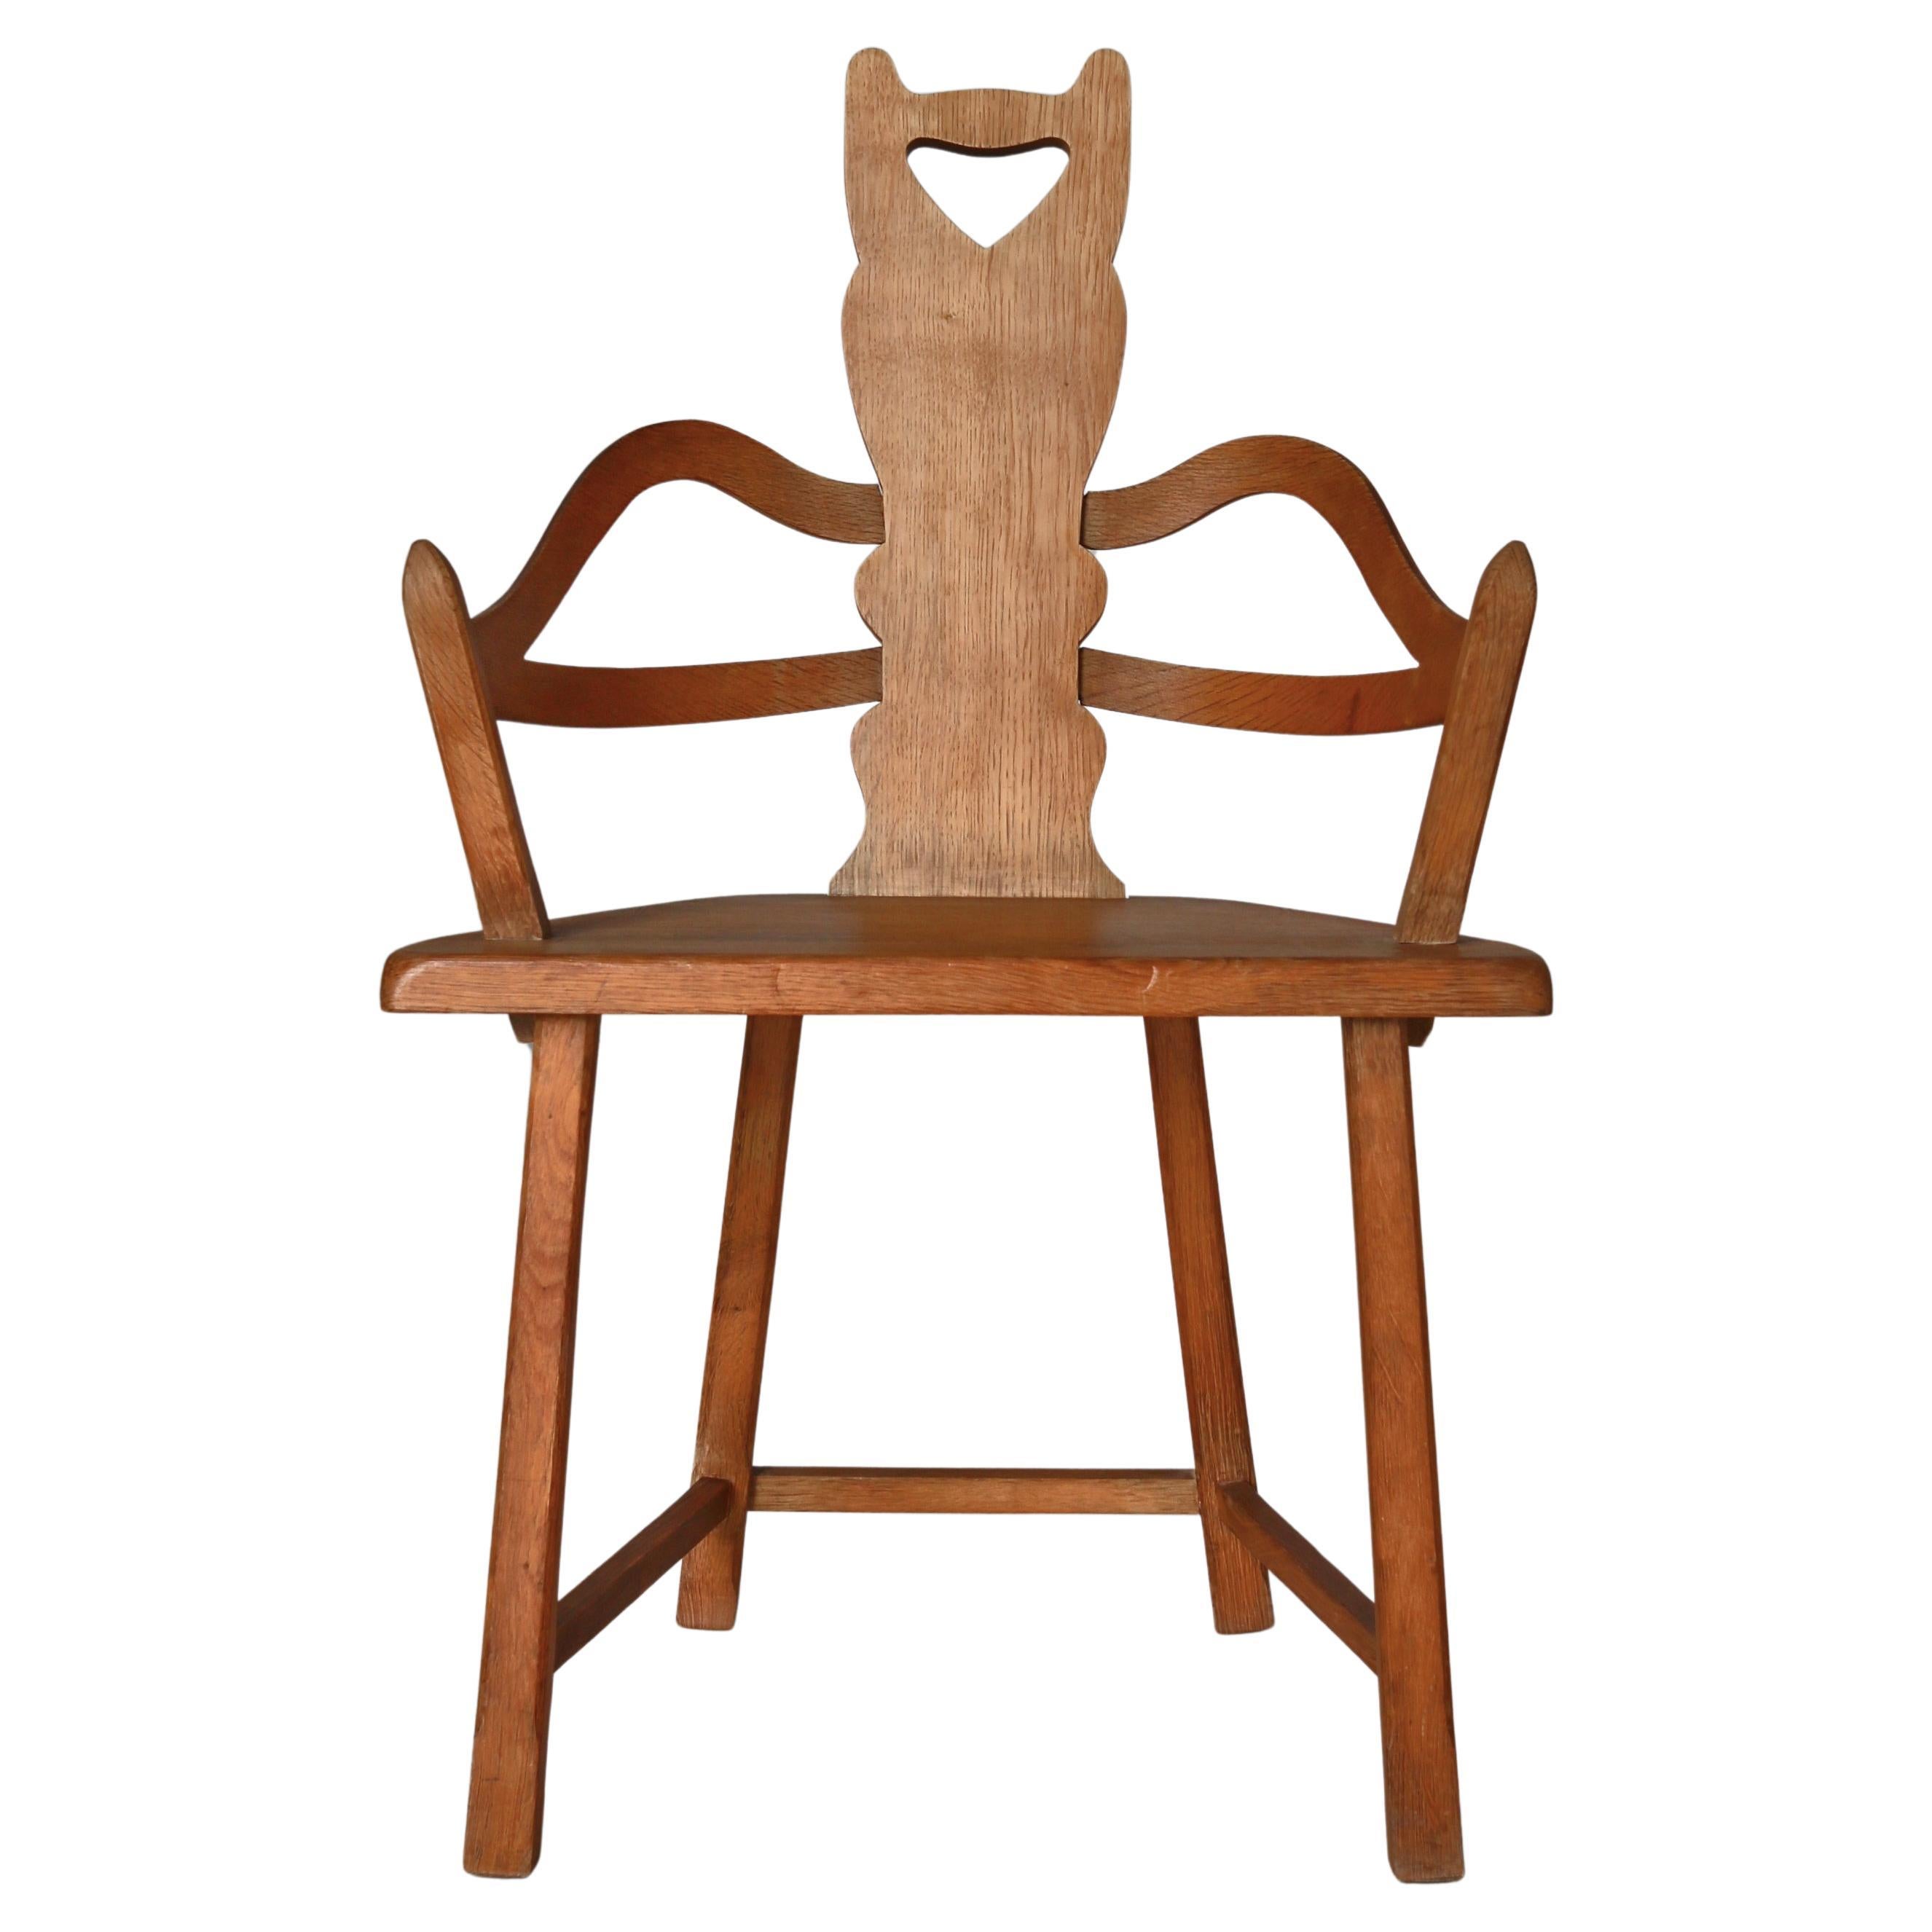 Swedish Folk Art Chair Handmade in Oakwood, 1900s For Sale